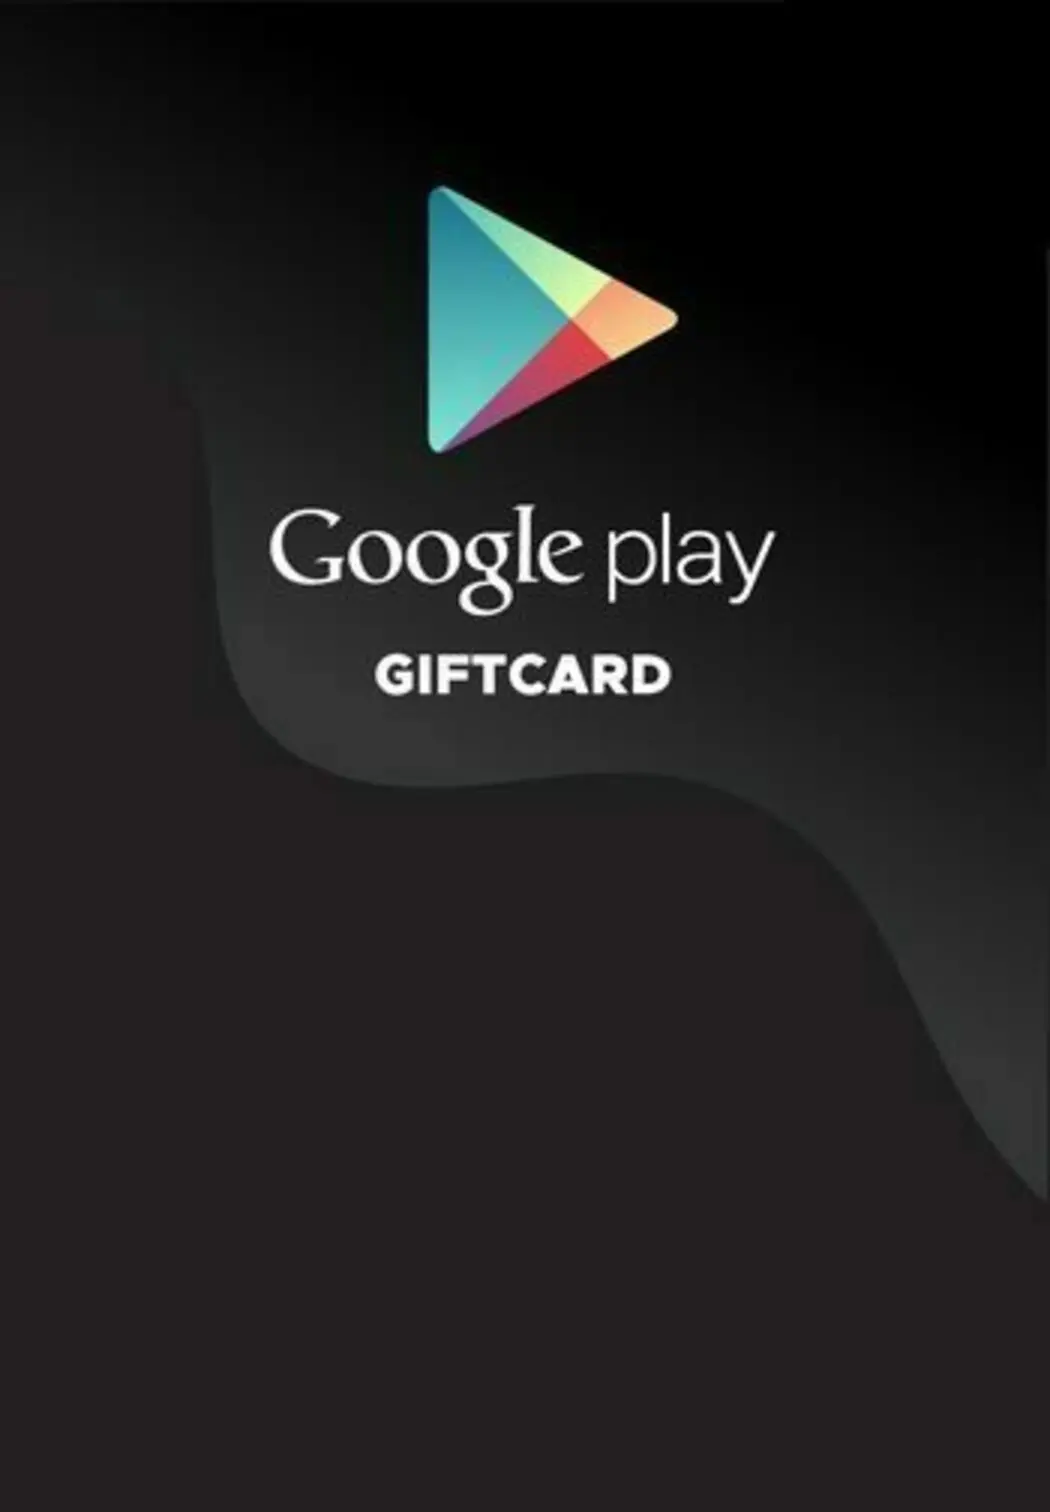 Google Play Rp50000 IDR Gift Card (ID) - Digital Code